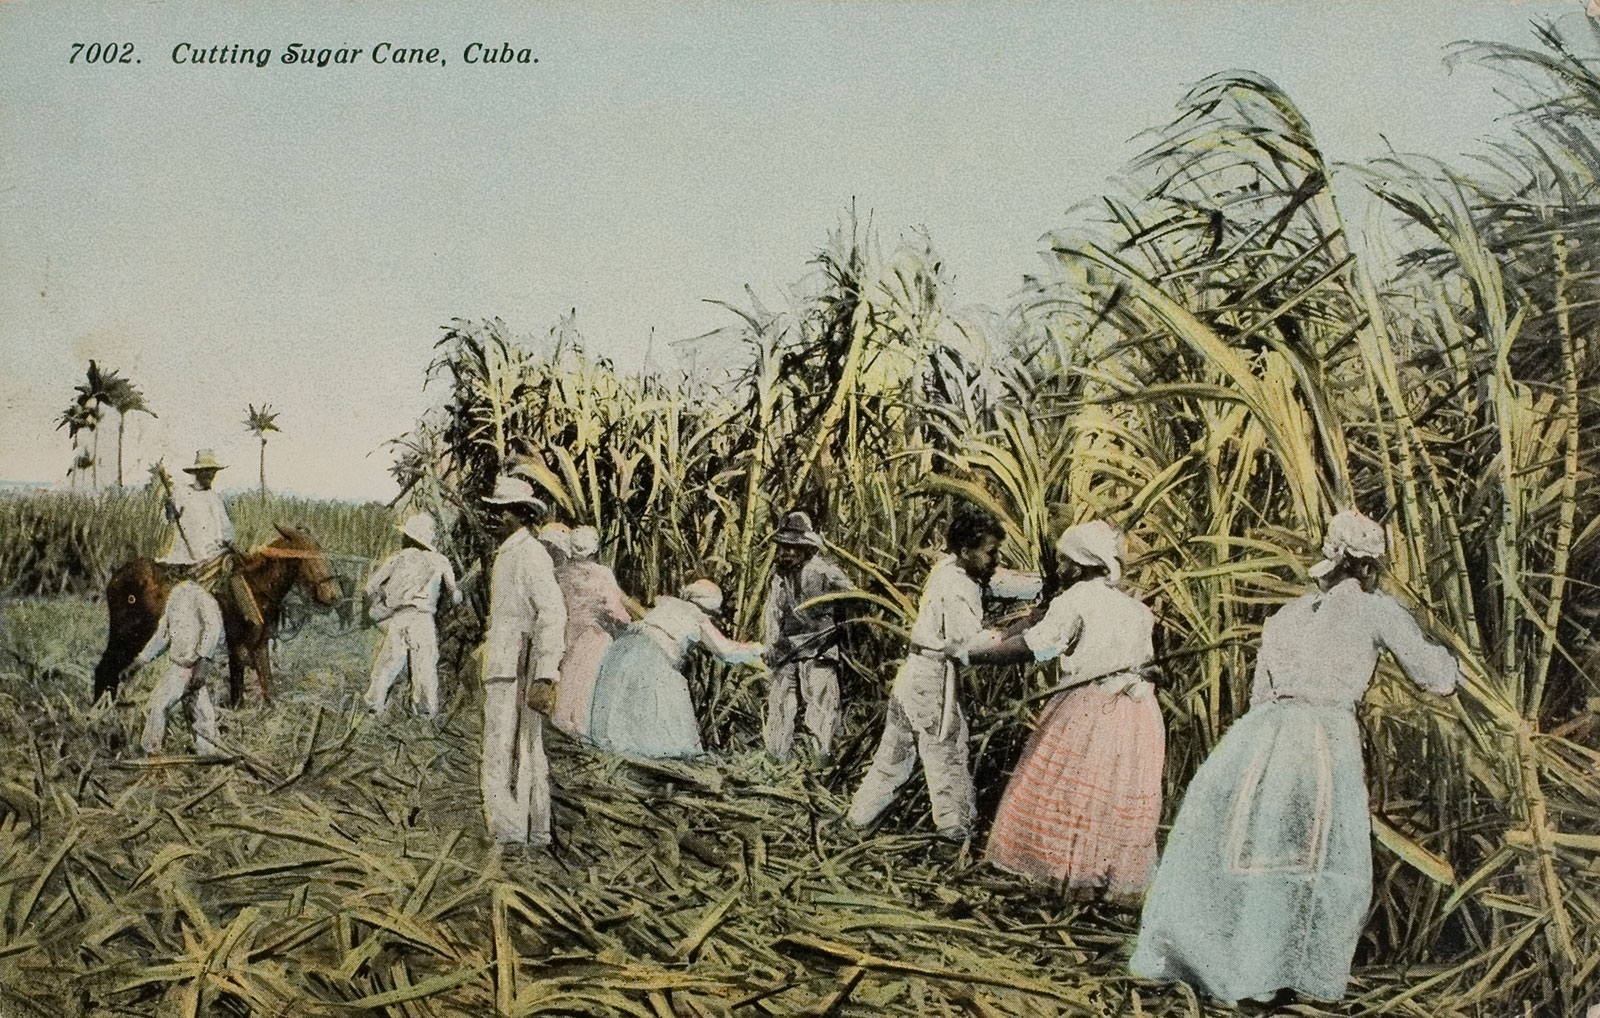 Postcard depicting sugarcane cutting